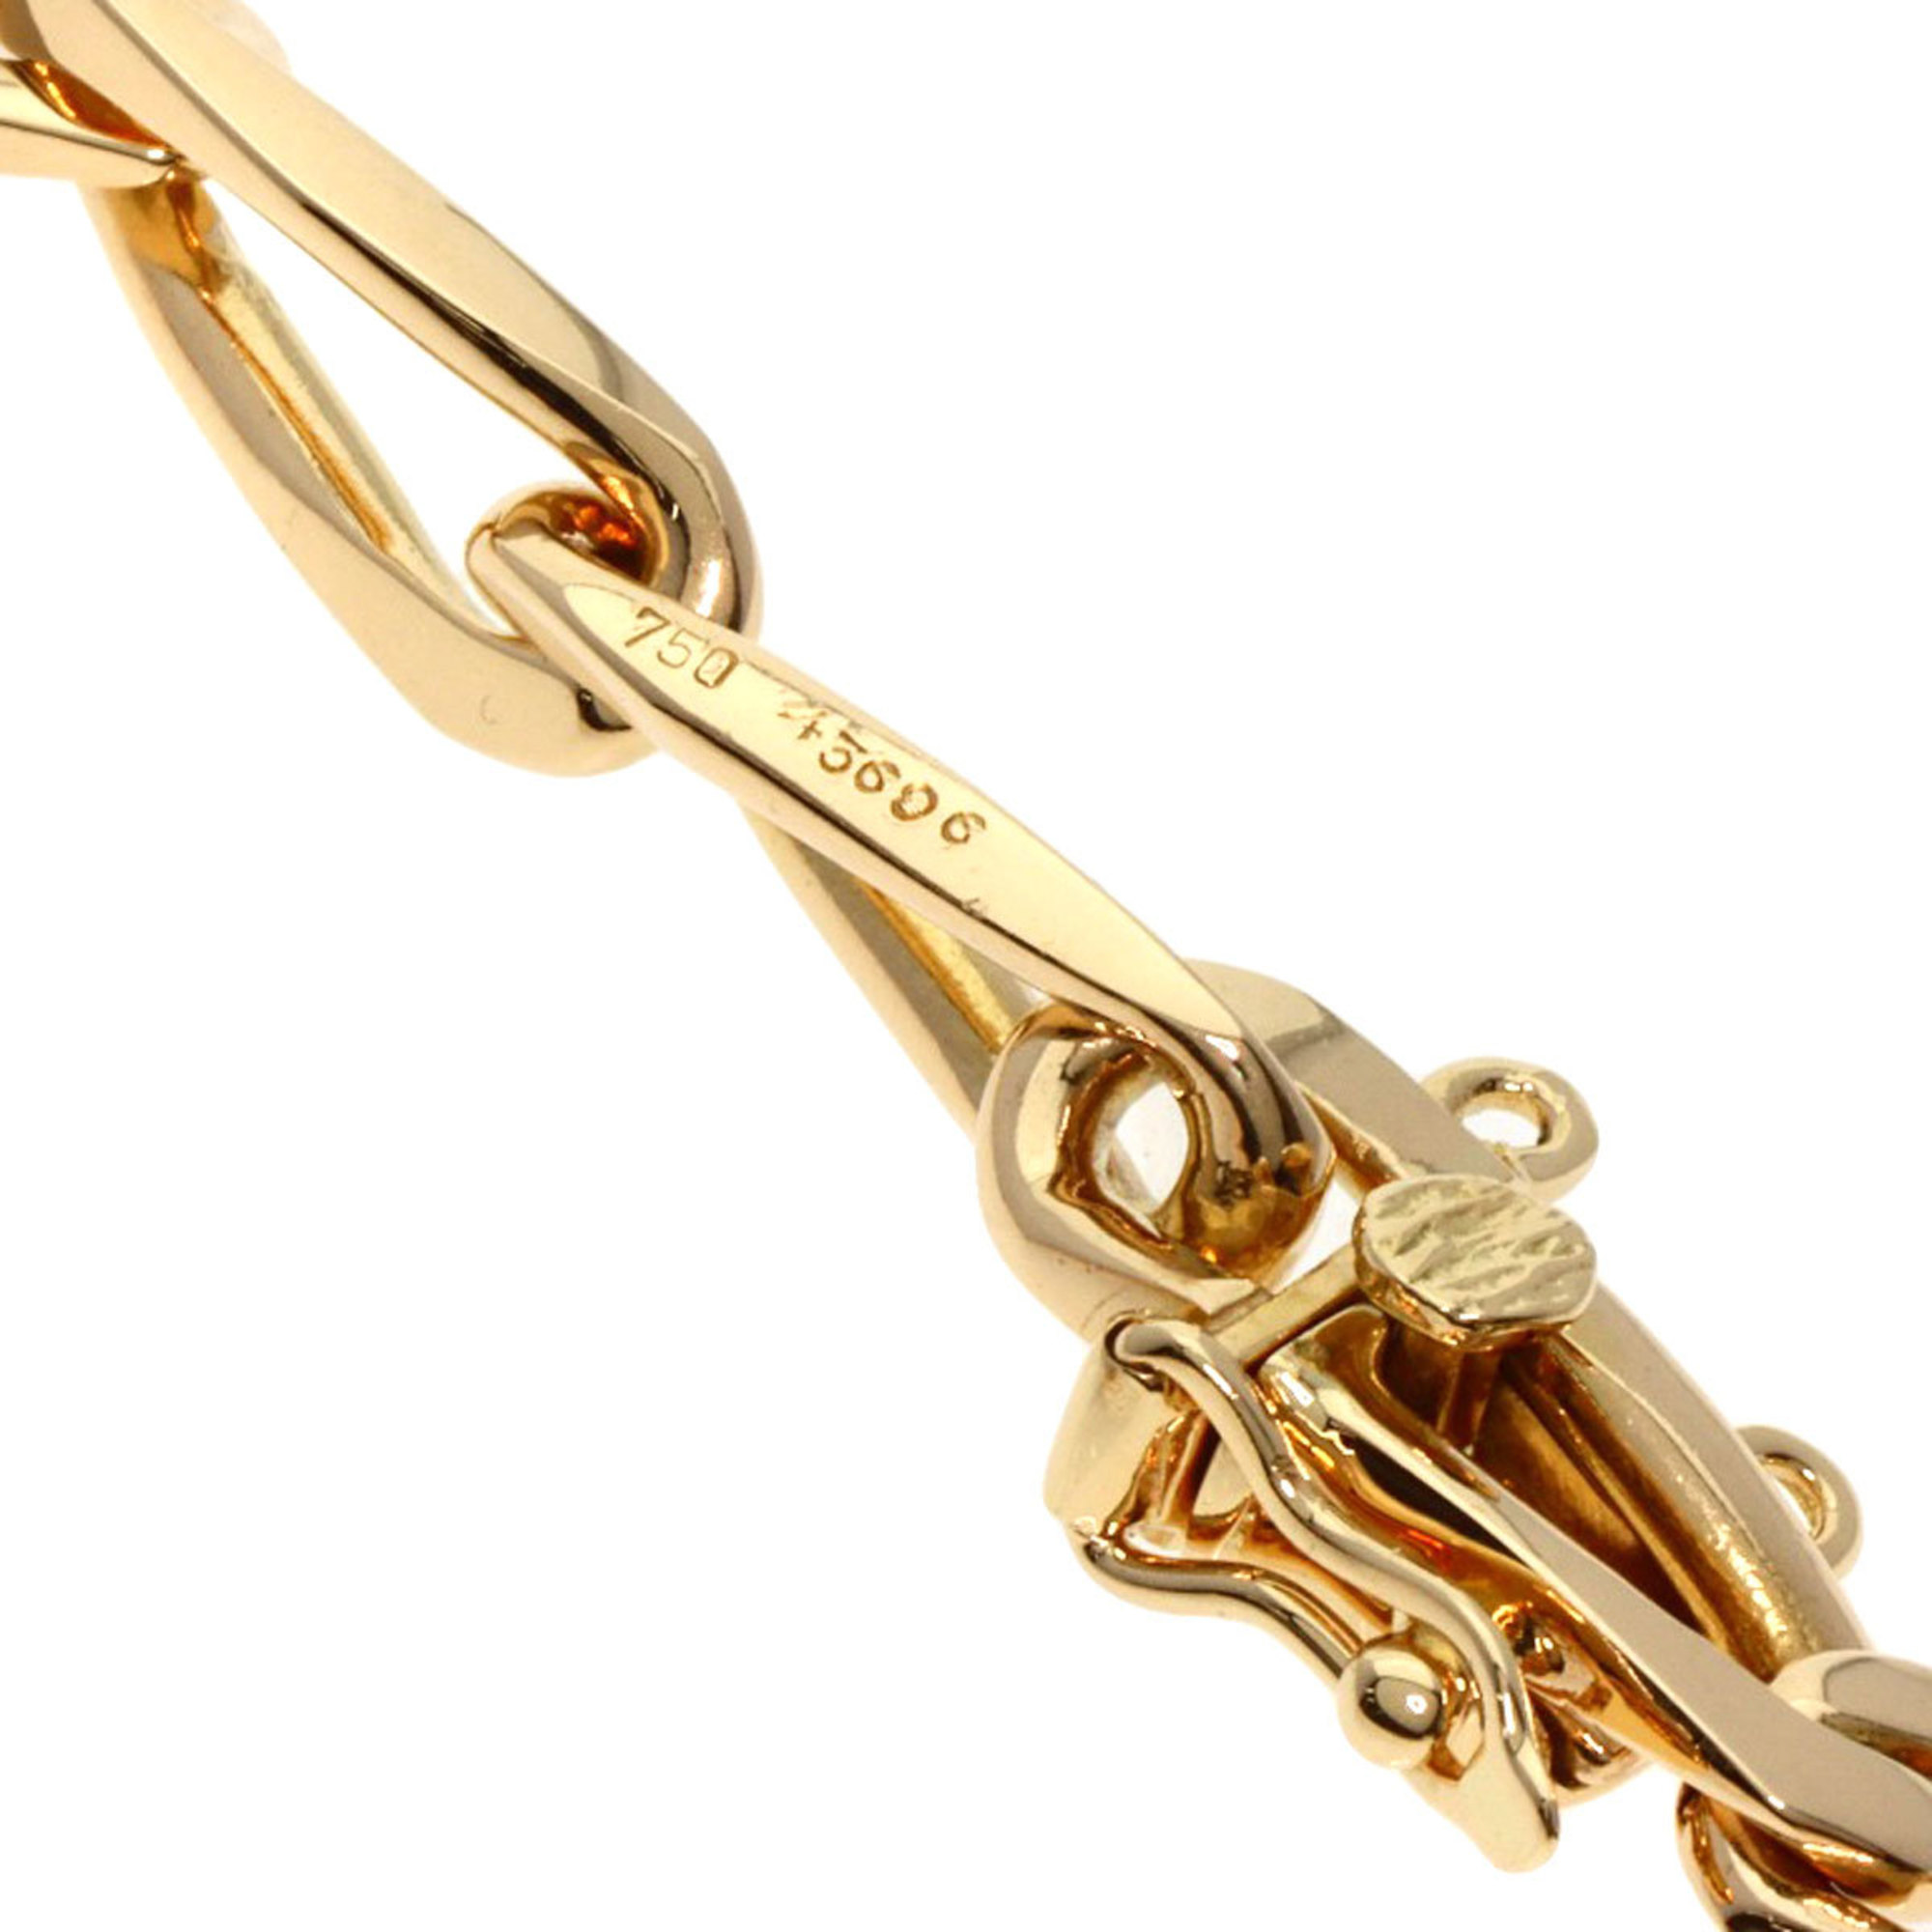 Cartier Chain Necklace K18 Yellow Gold Women's CARTIER